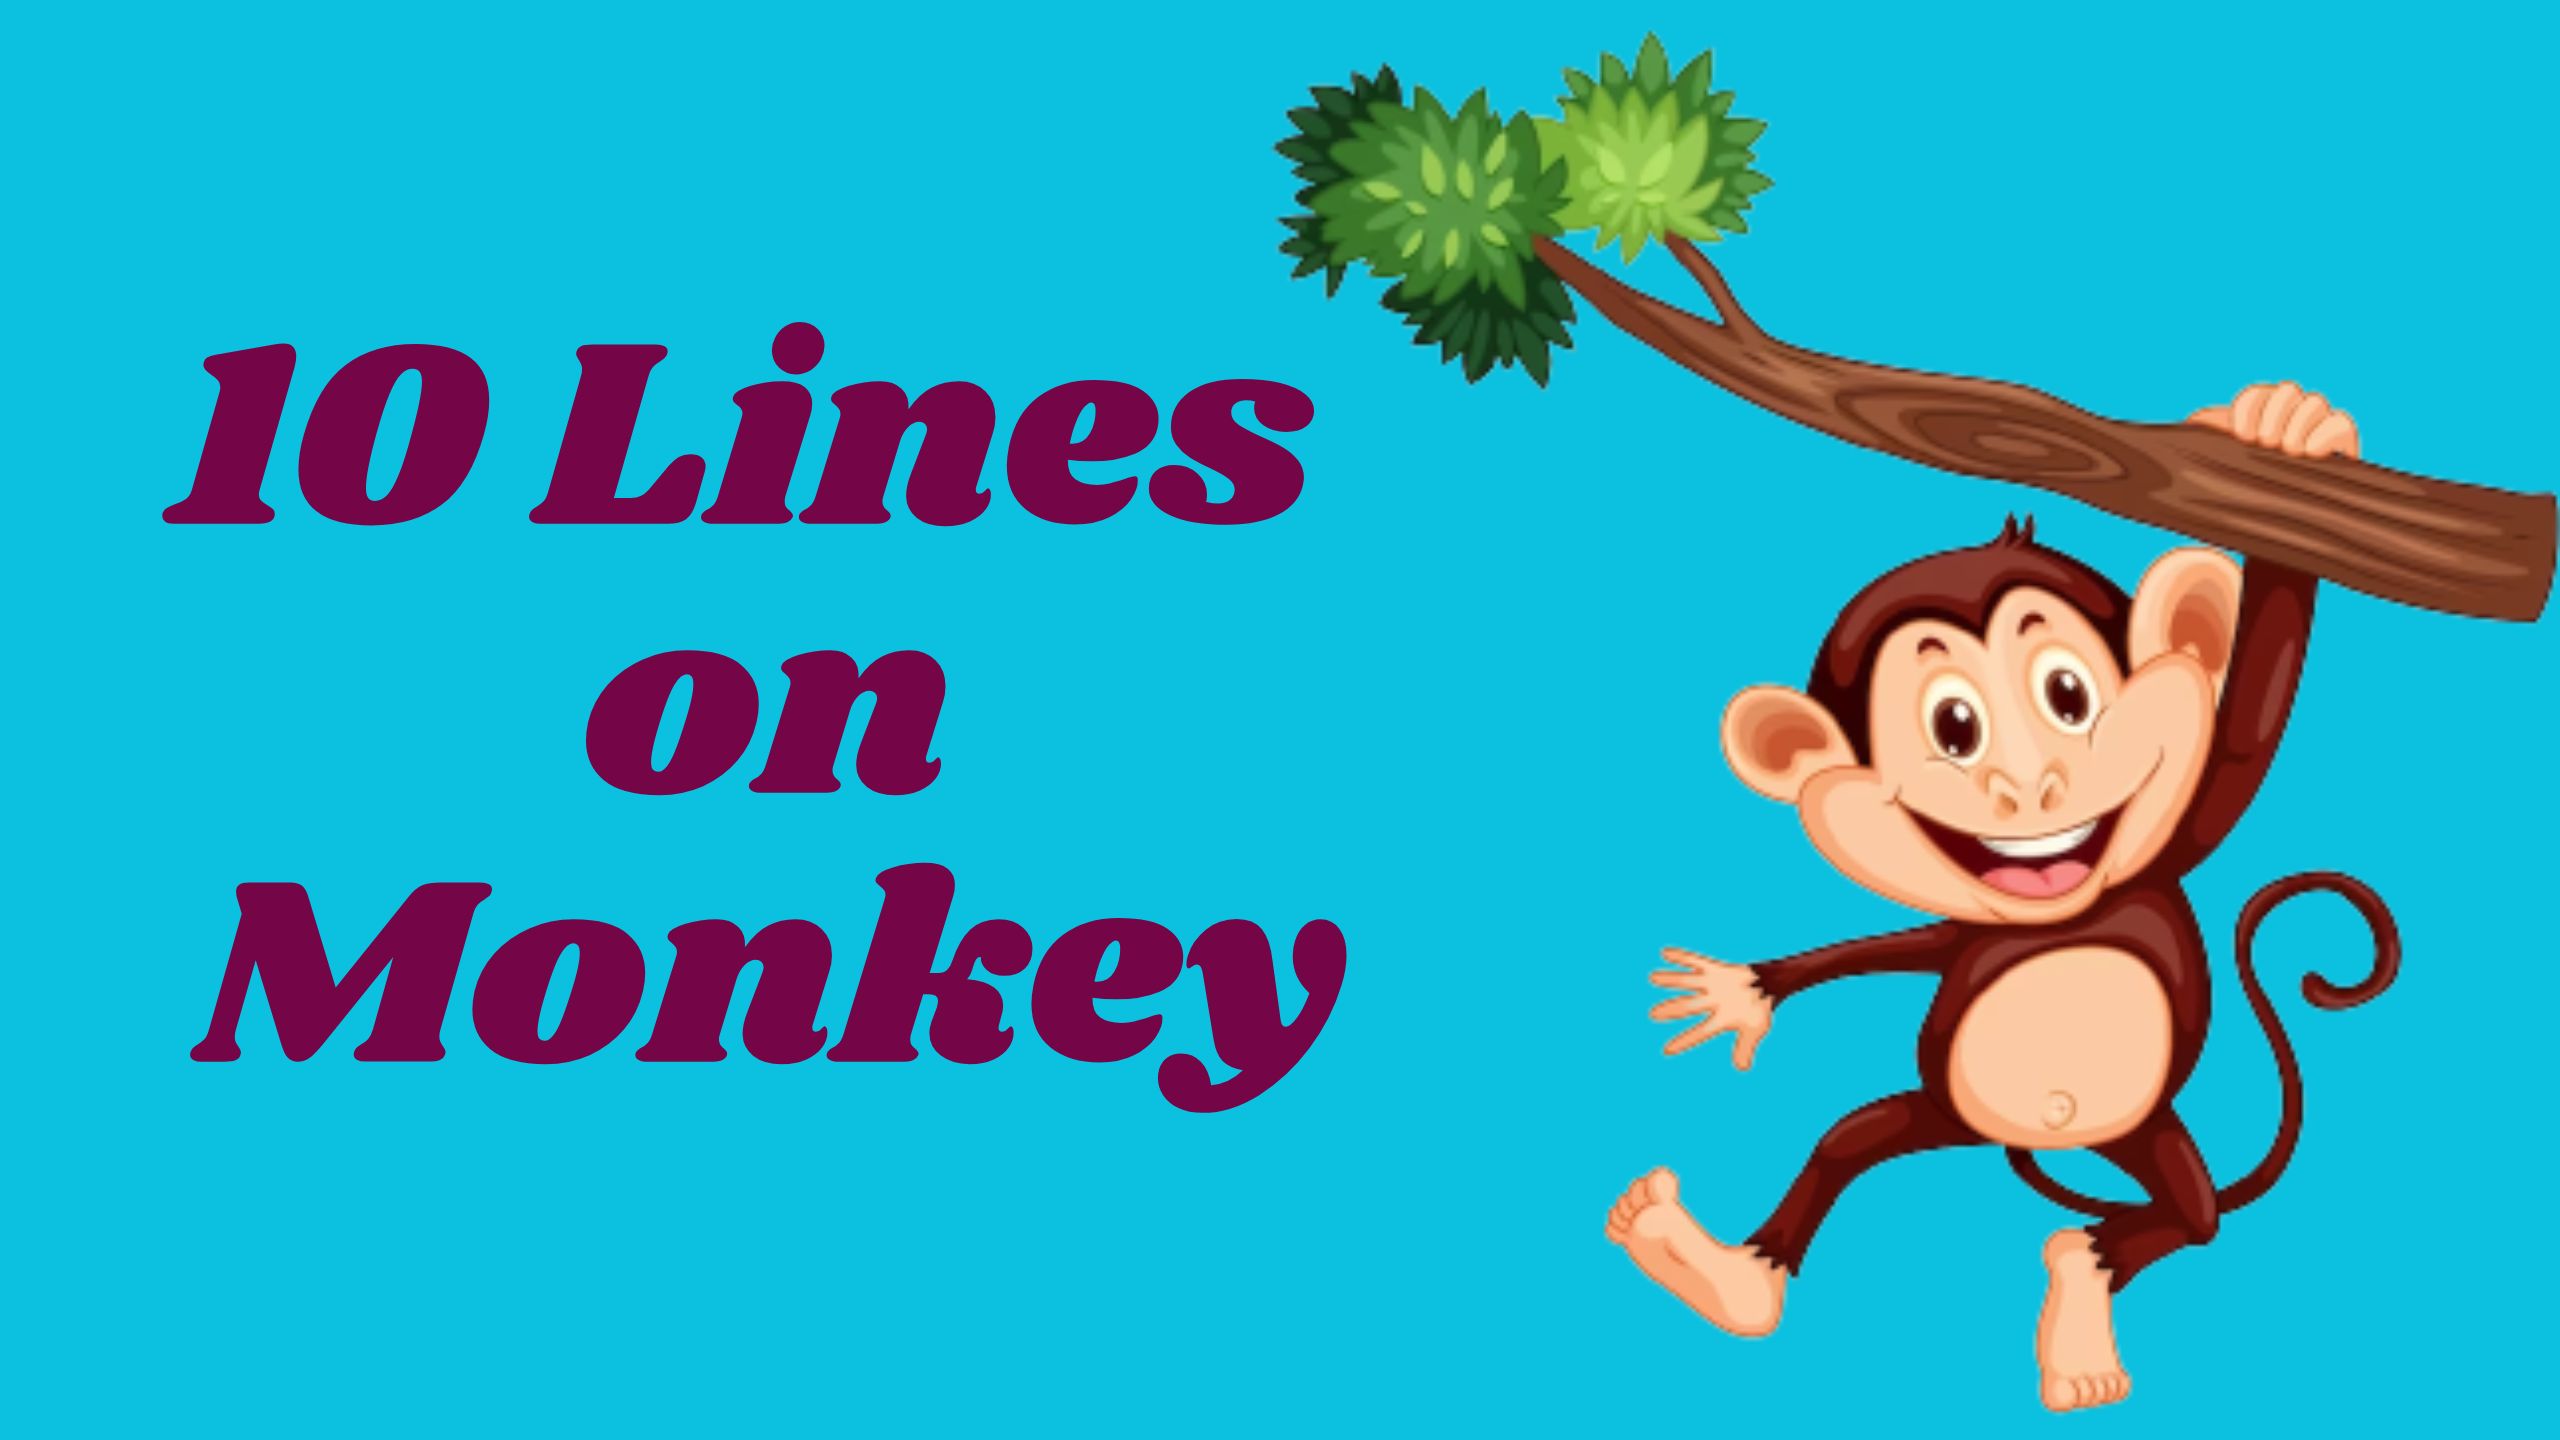 10 Lines on monkey